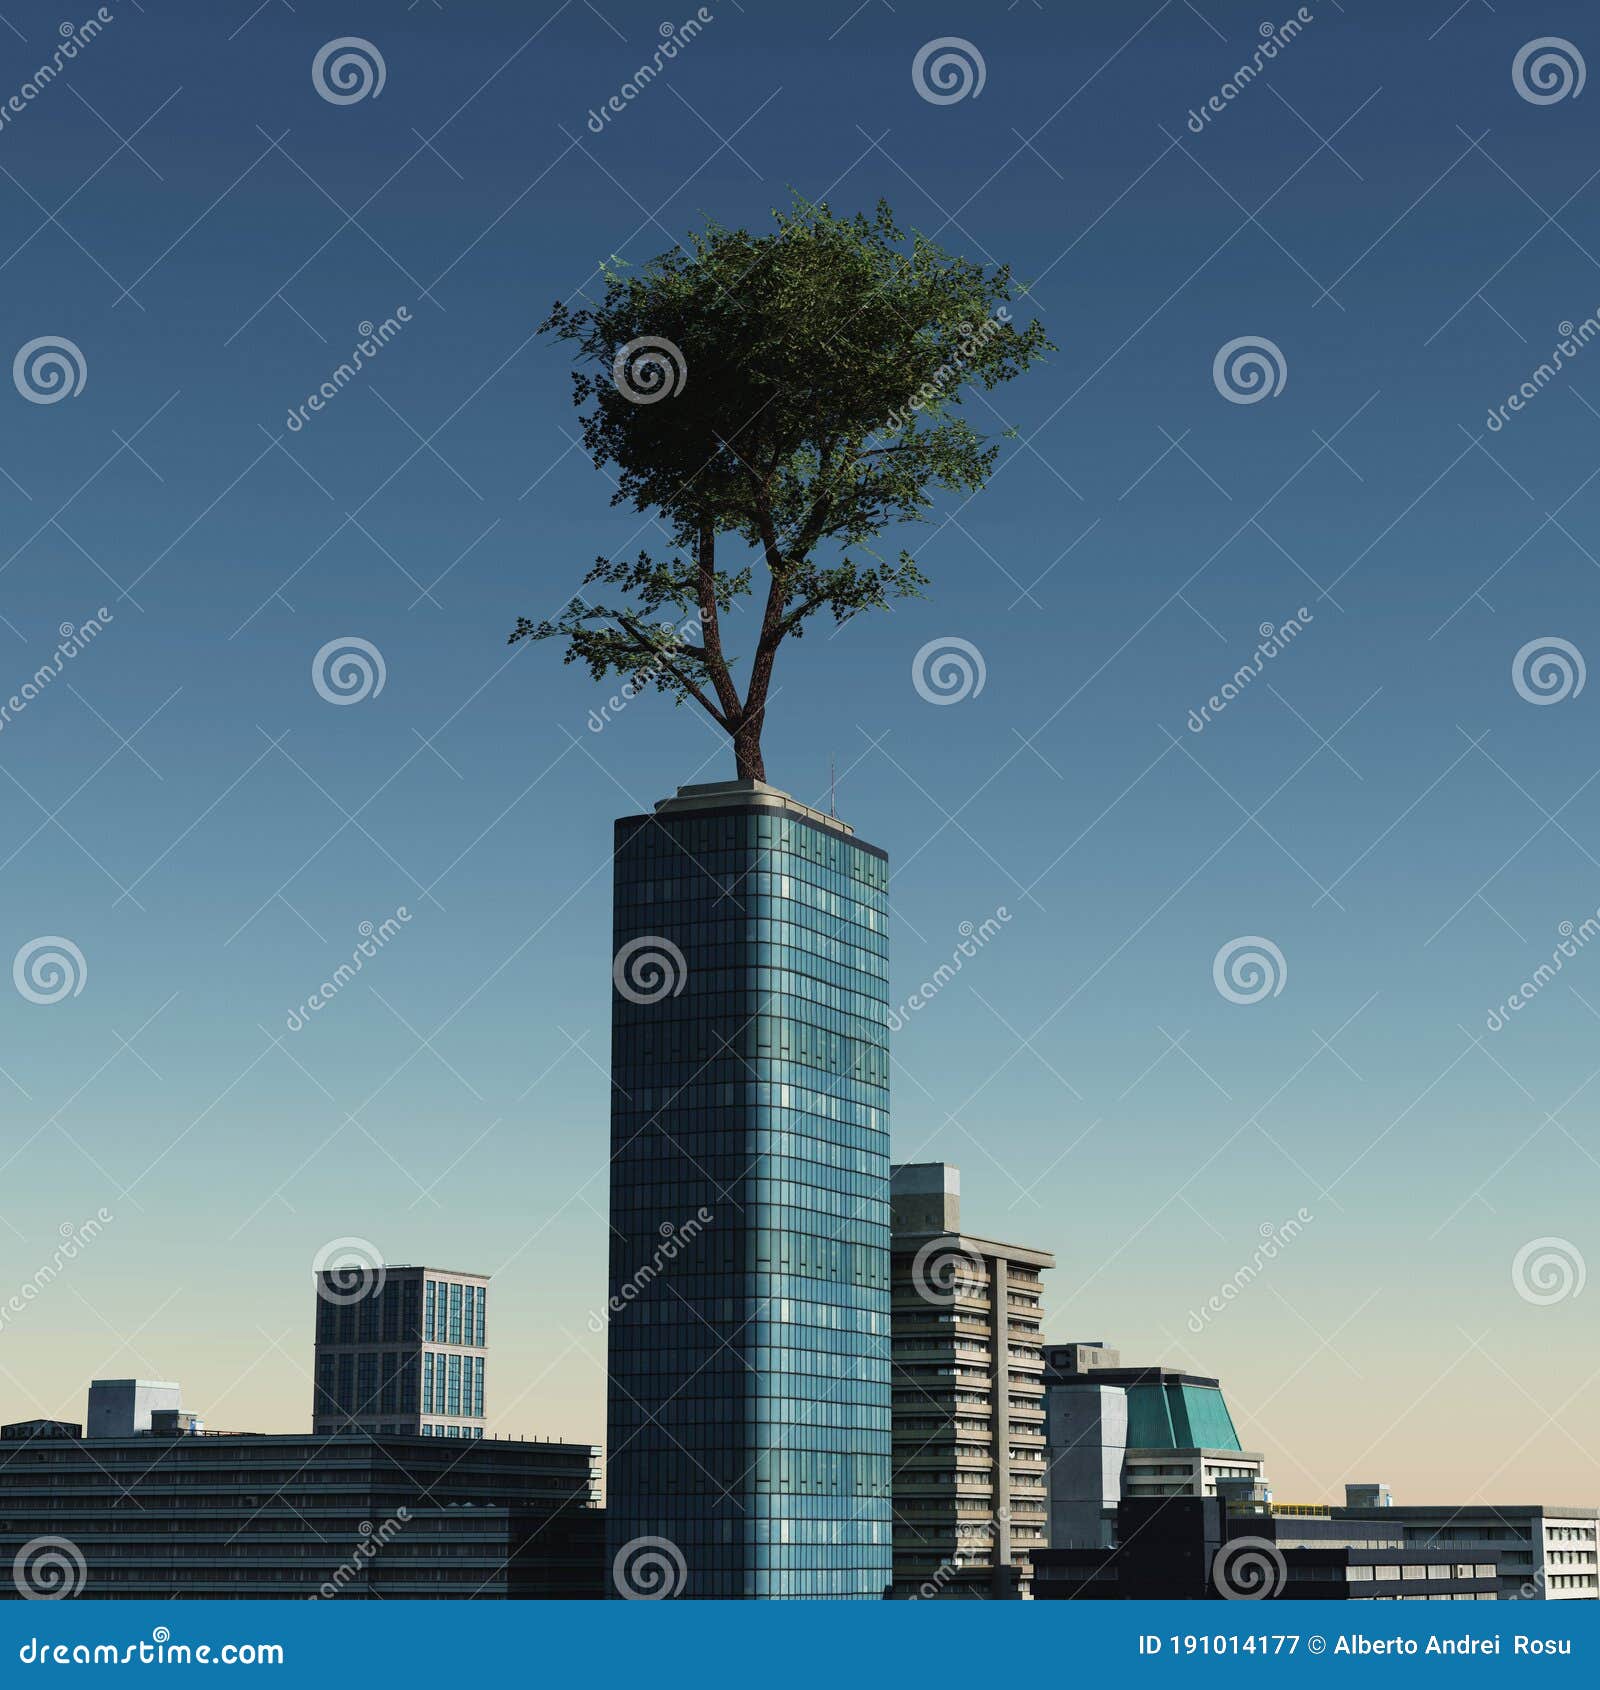 big maple tree on top of a skyscrape